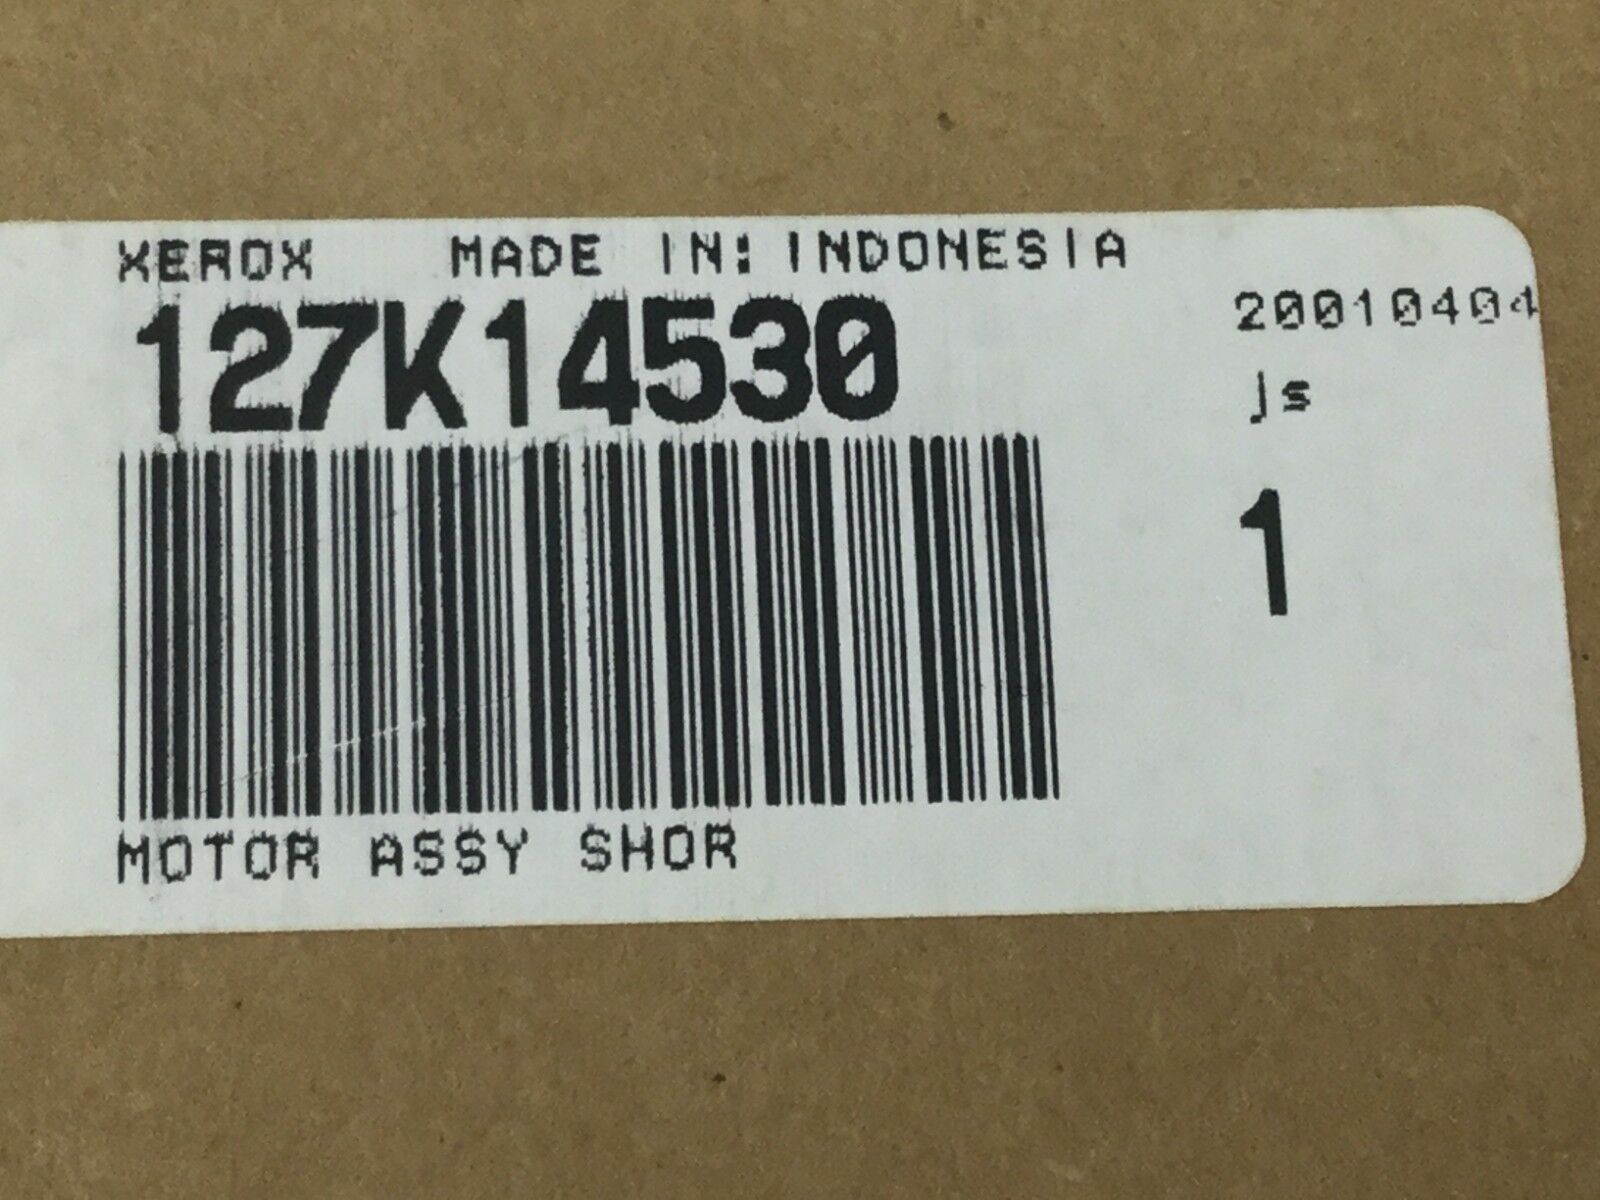 Genuine Xerox 127K14530 Motor Assy Shor New in Sealed Box